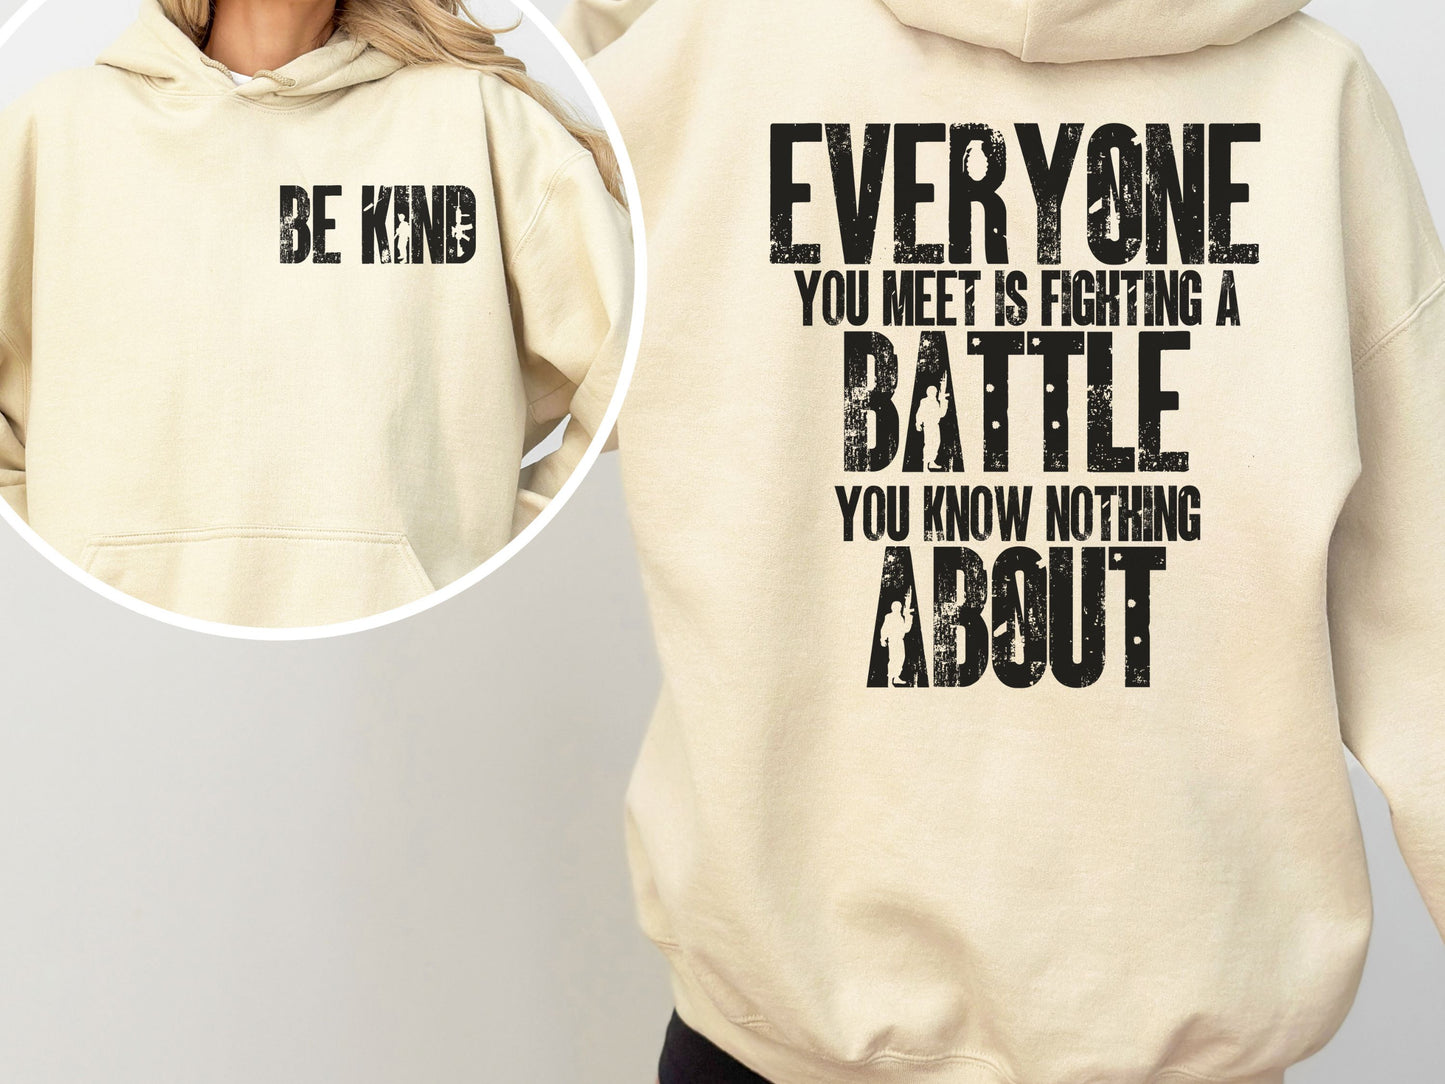 Be Kind, Everyone is Fighting a Battle - Spread Positivity. Empathy-Inspired Sweatshirt